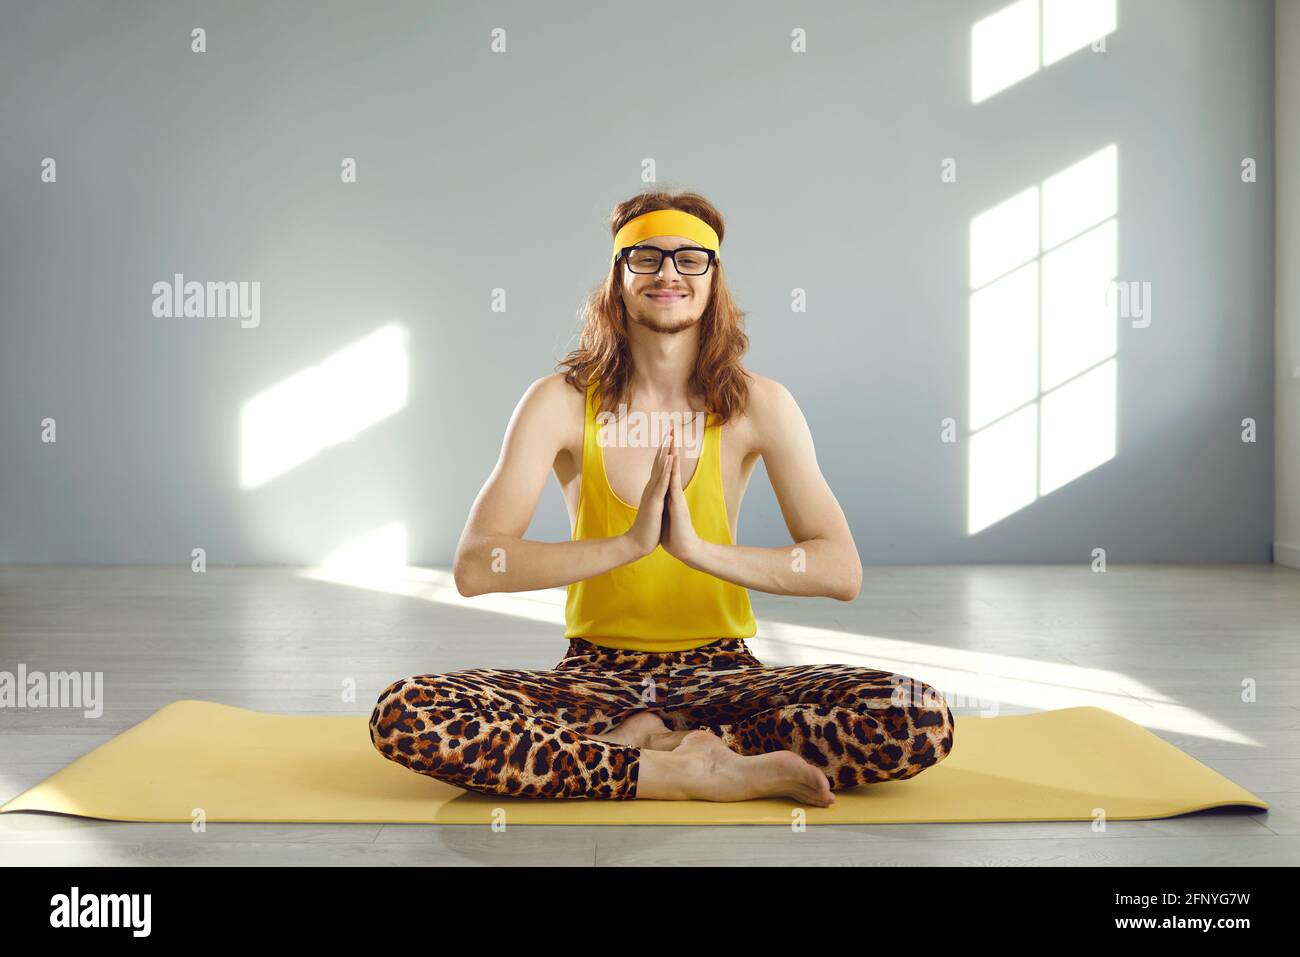 Funny calm man enjoying yoga meditation exercise sitting legs crossed on fitness mat Stock Photo